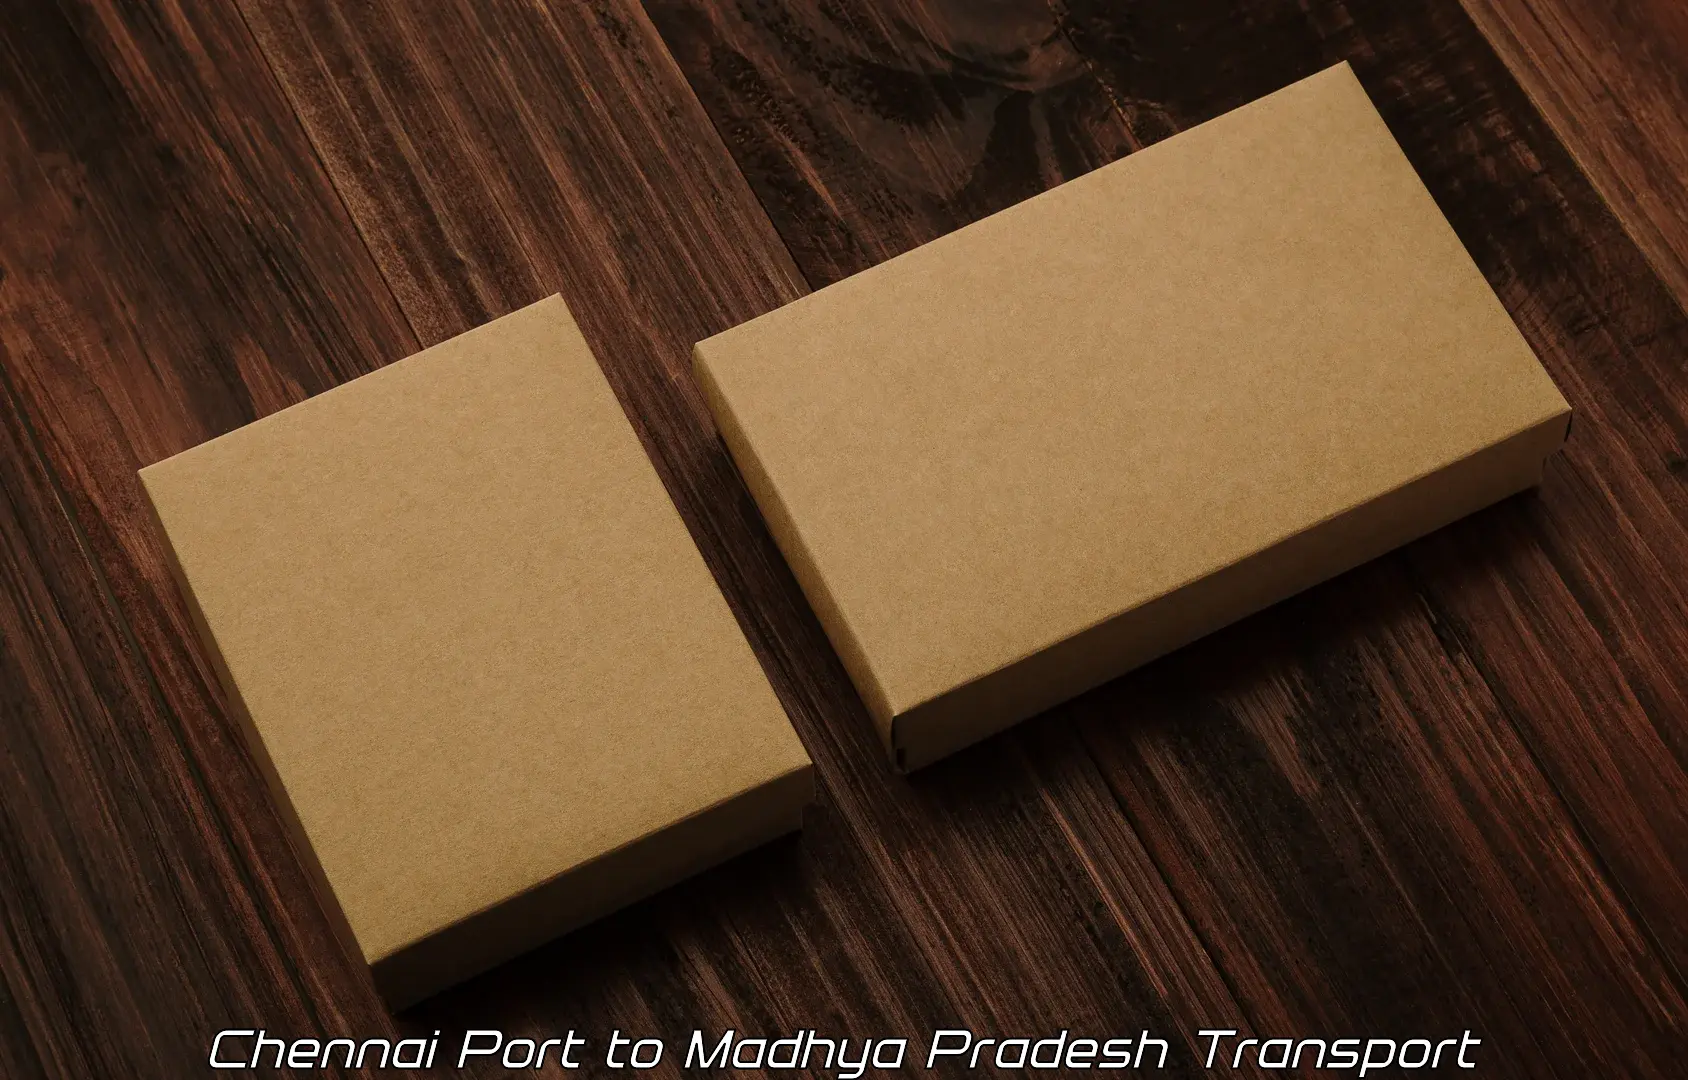 Delivery service Chennai Port to Kotma